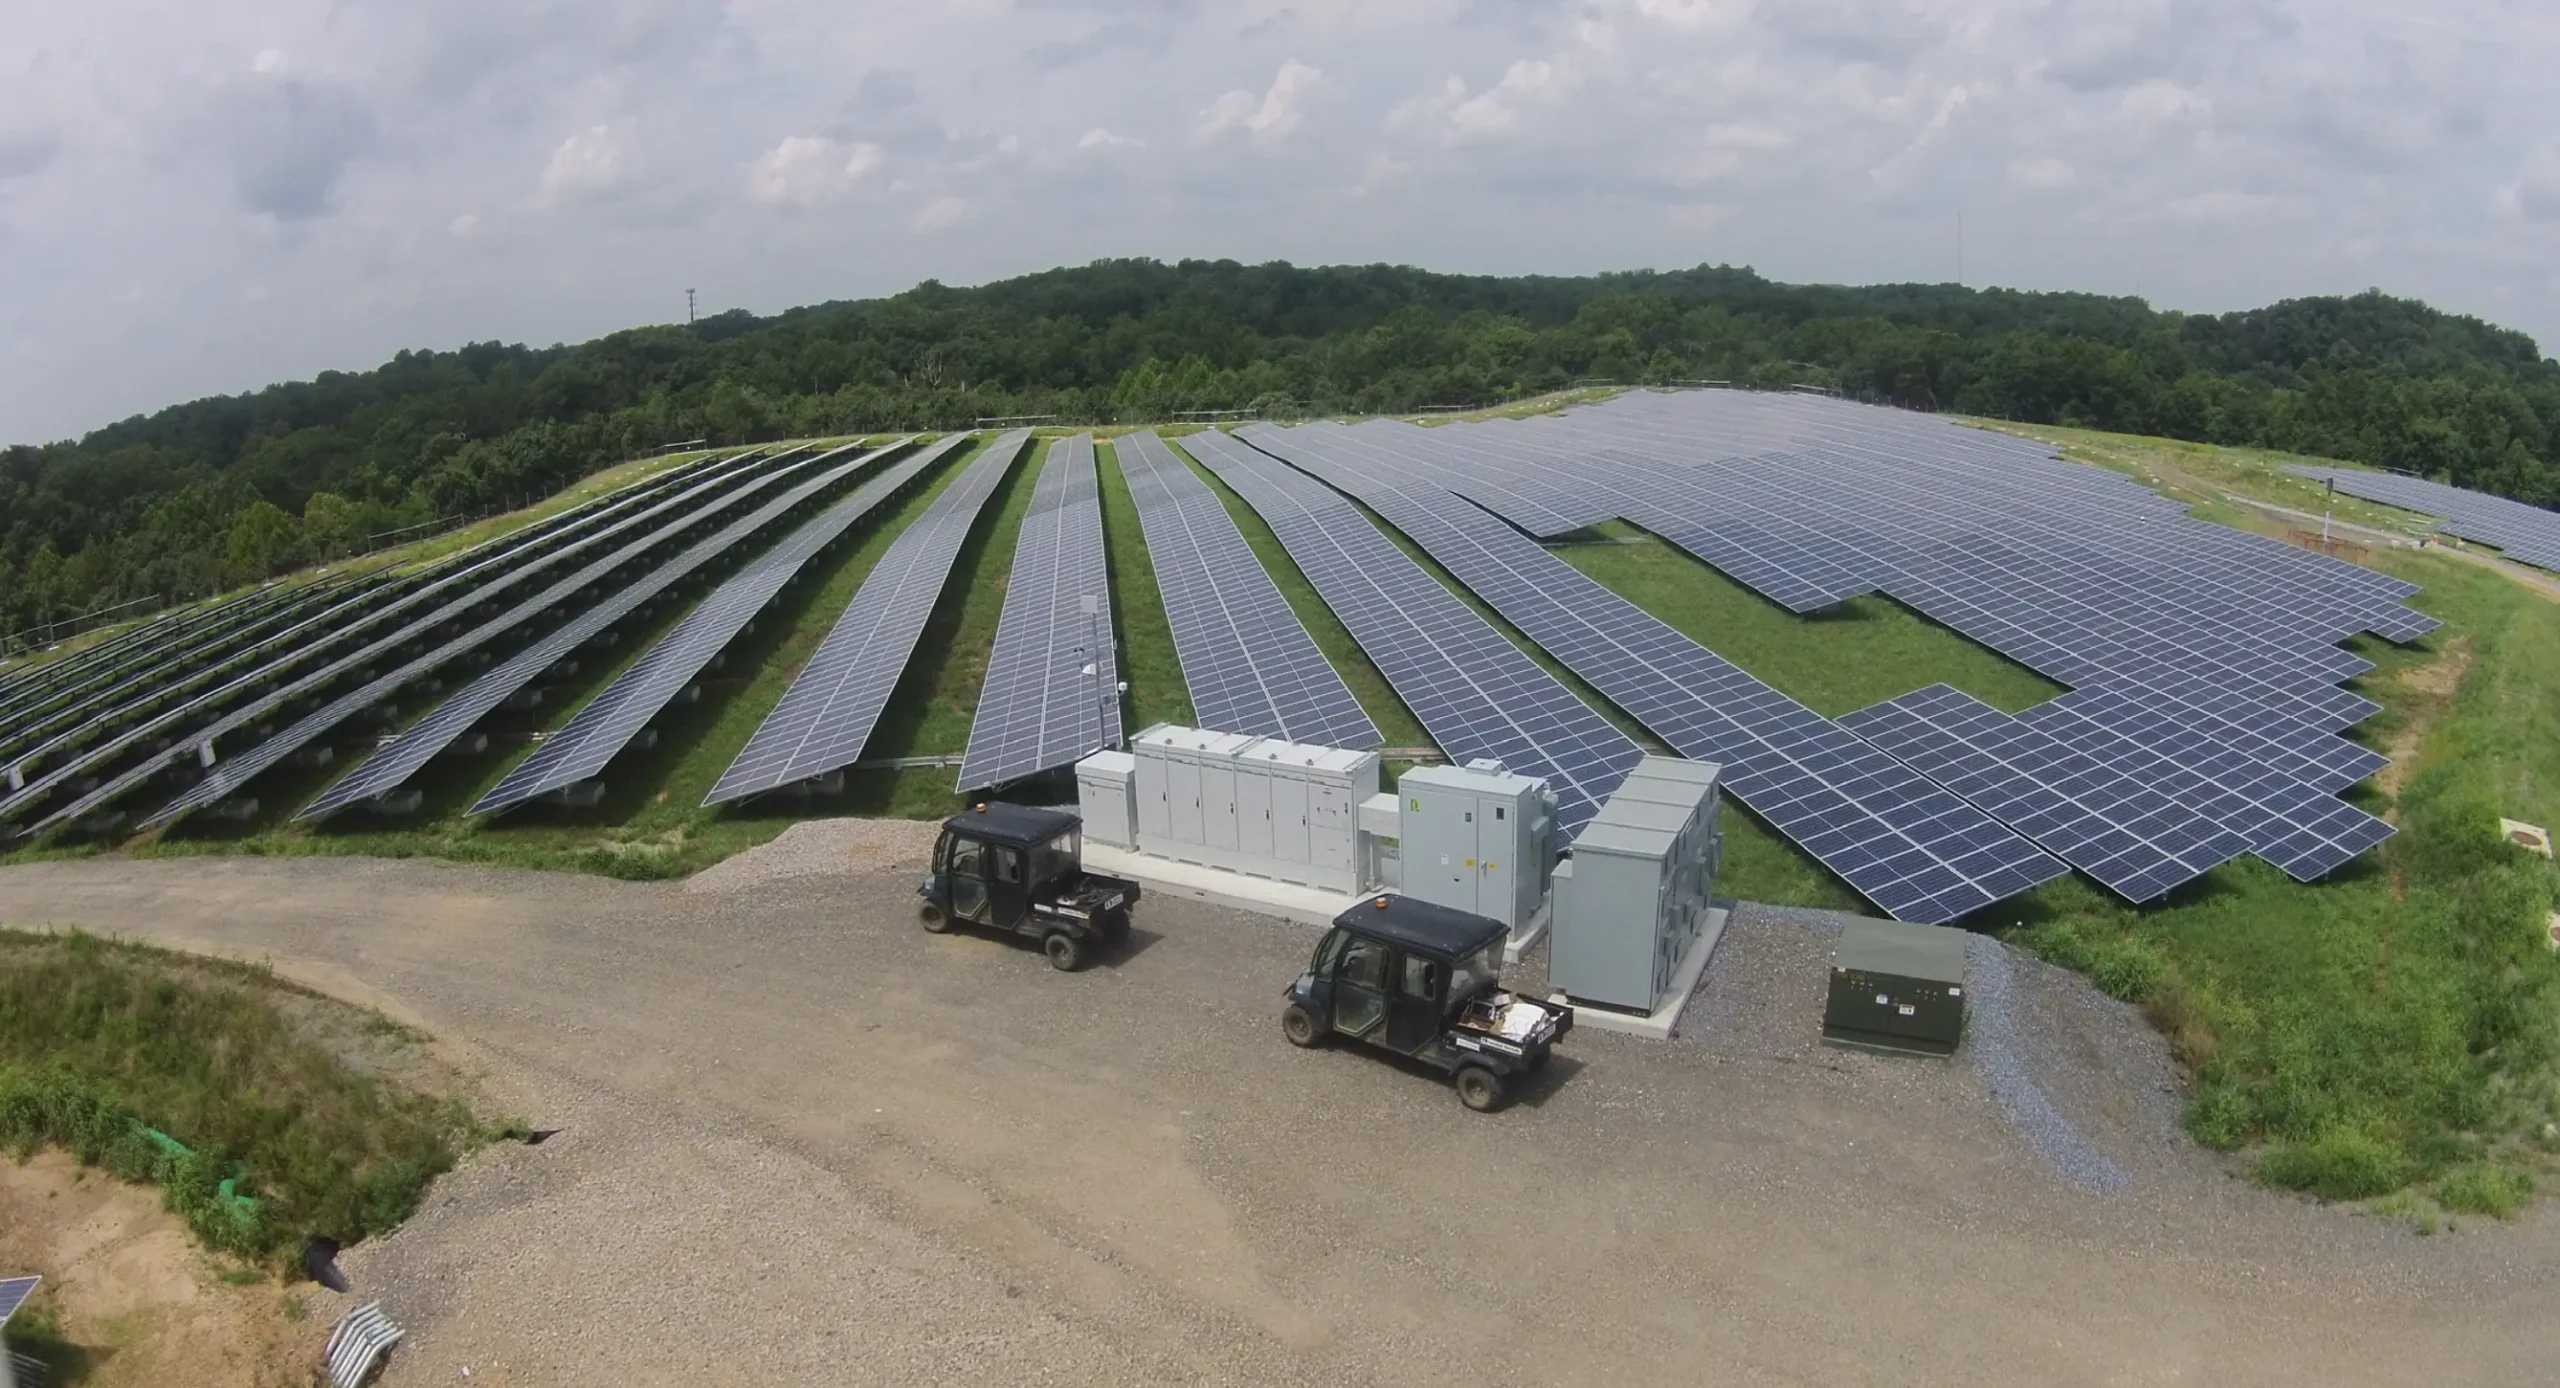 community solar energy generating system in maryland - When did community solar start in Maryland